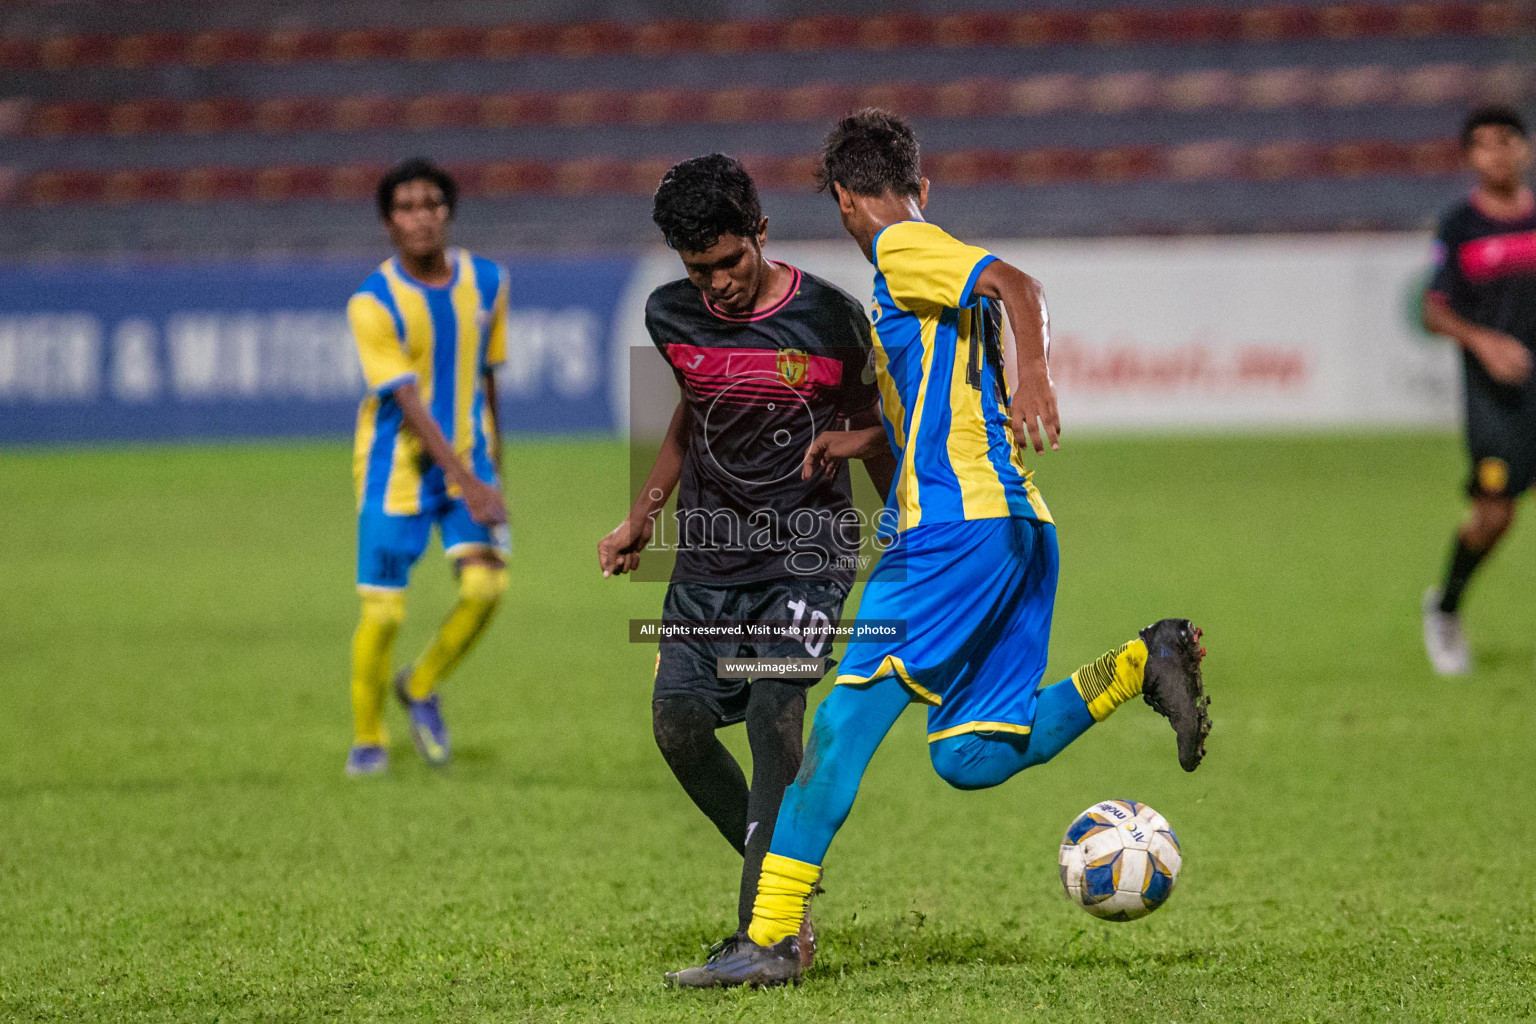 U16 Youth Championship Final held on 03rd July 2022 in National Football Stadium, Male', Maldives Photos by Nausham Waheed